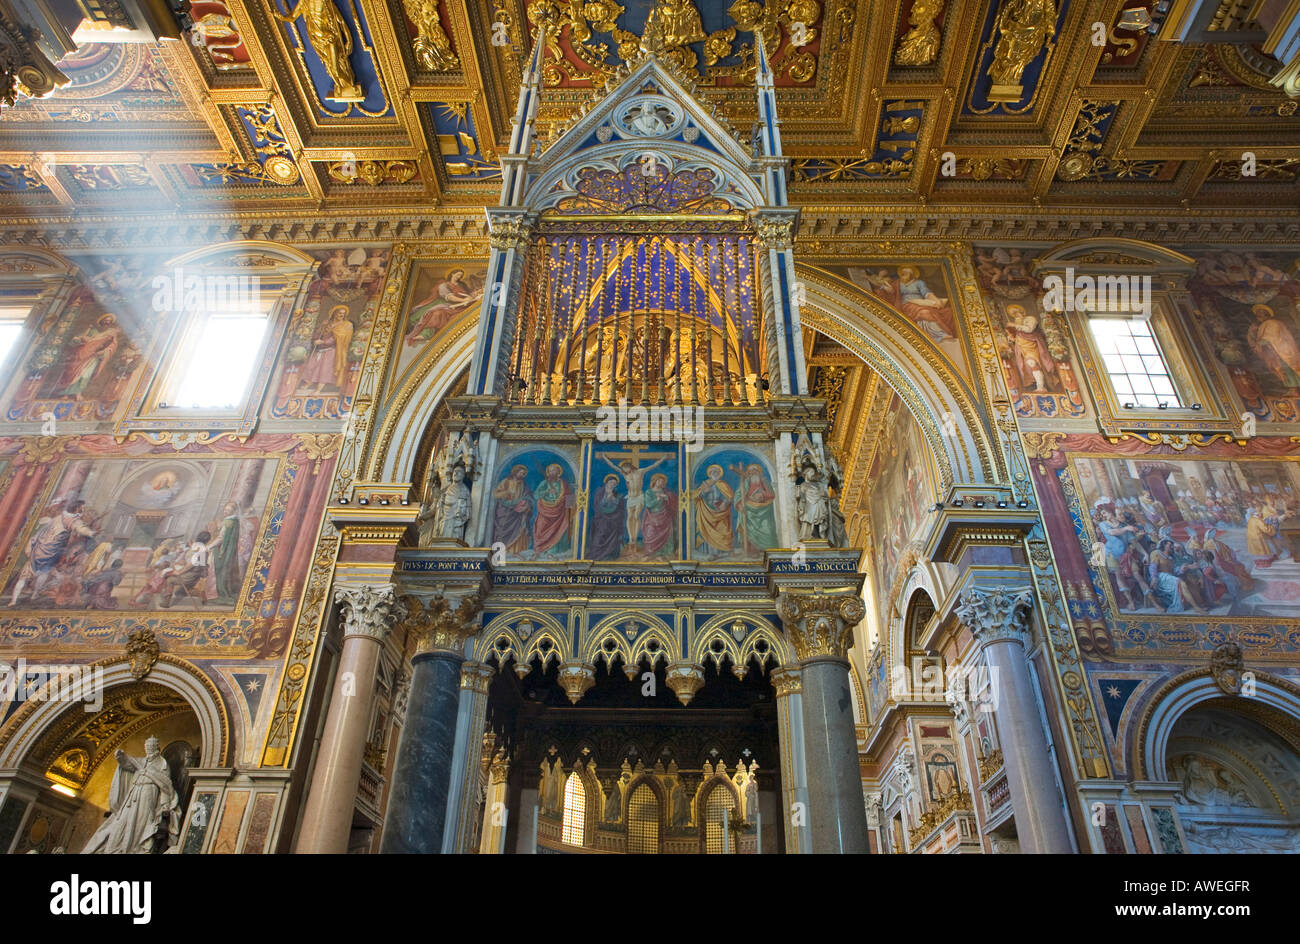 Ciborium containing relics of Saints Peter and Paul, Basilica of St John Lateran, Rome, Italy, Europe Stock Photo